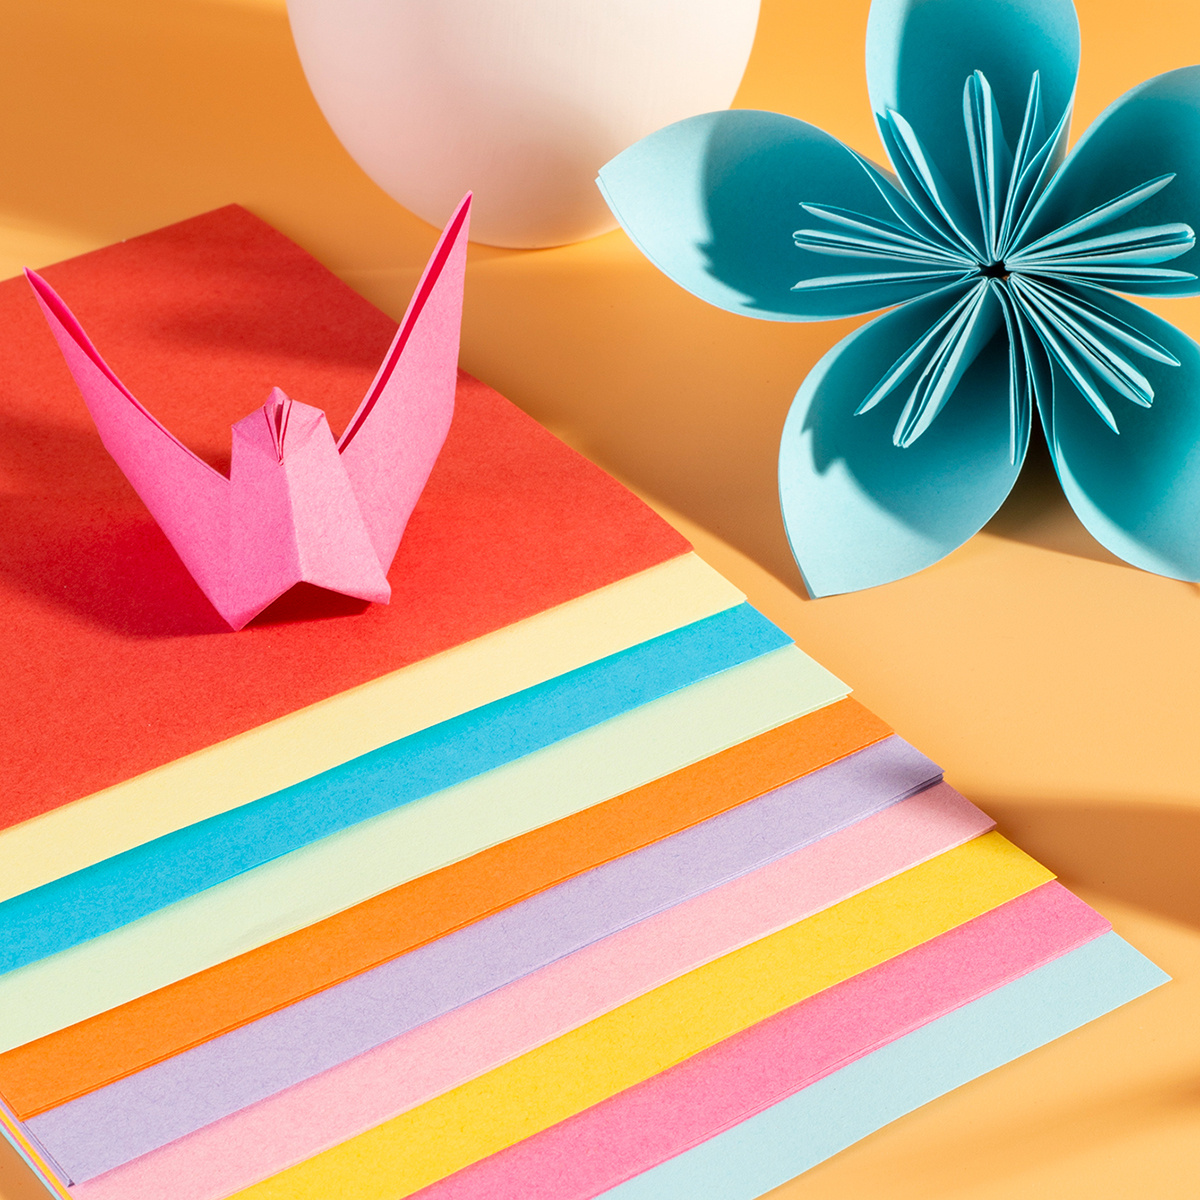 Shop GENERIC Toyandona Handcraft Colored Paper Kids Origami Kit